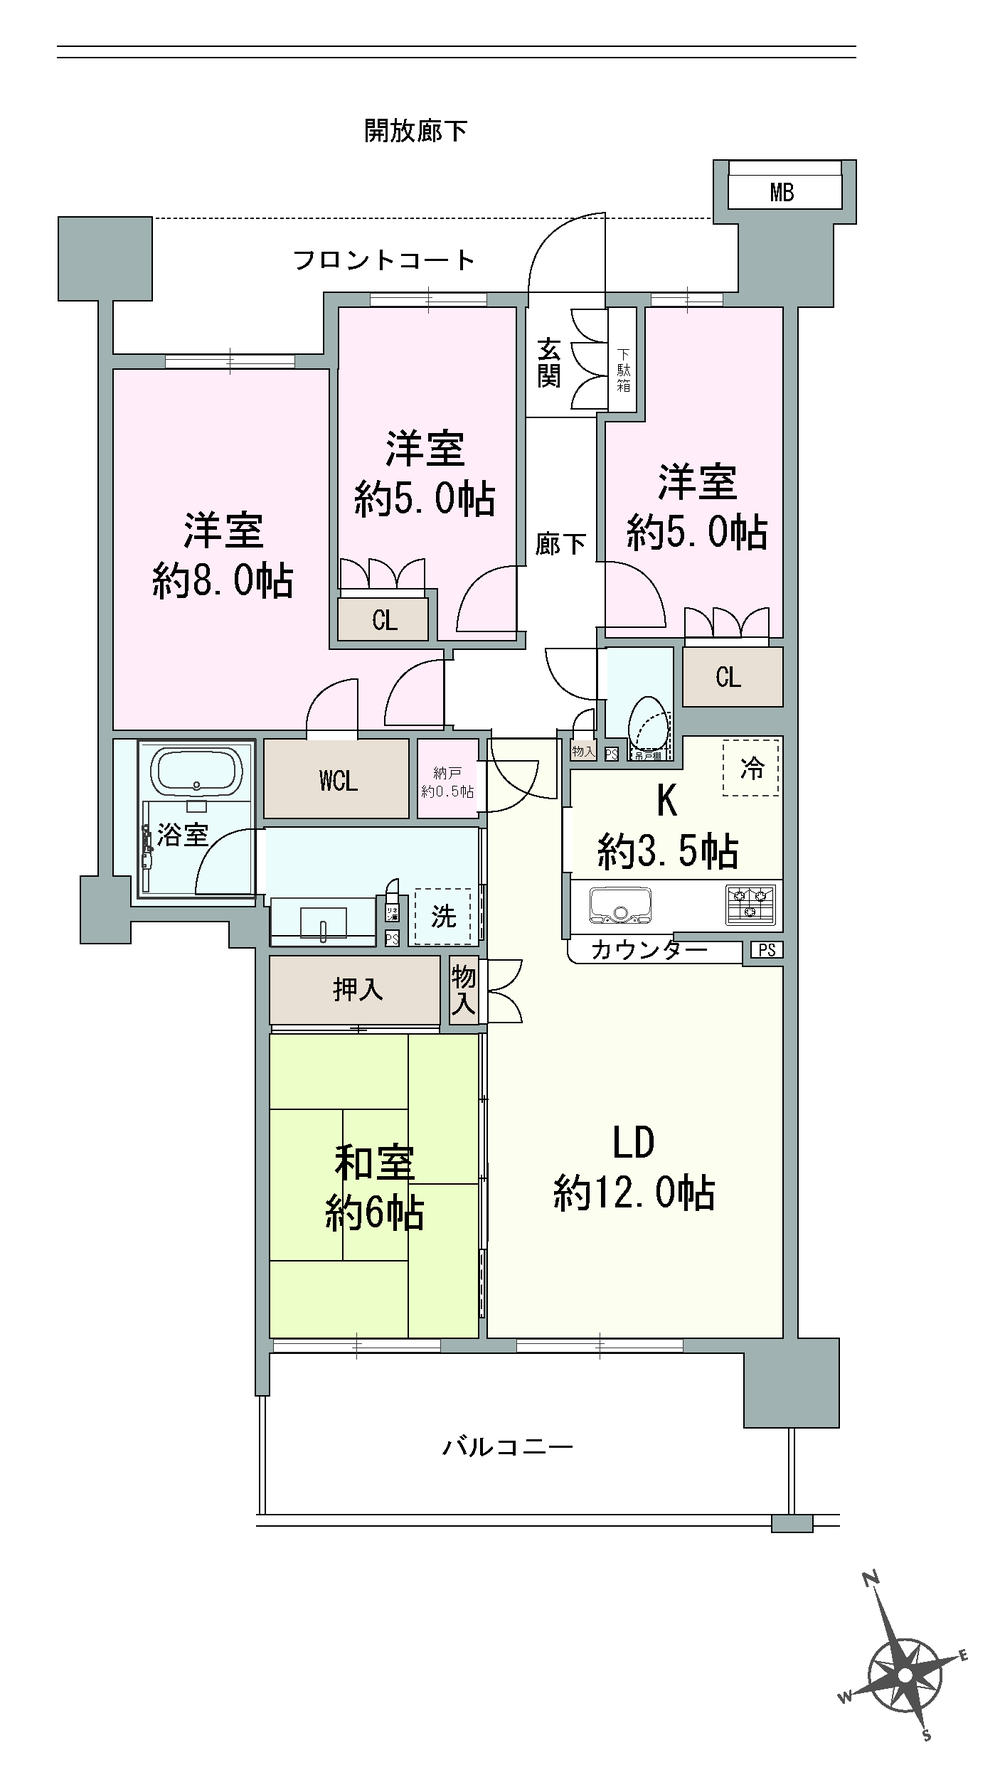 Floor plan. 4LDK + S (storeroom), Price 23,100,000 yen, Occupied area 87.03 sq m , Balcony area 12.4 sq m